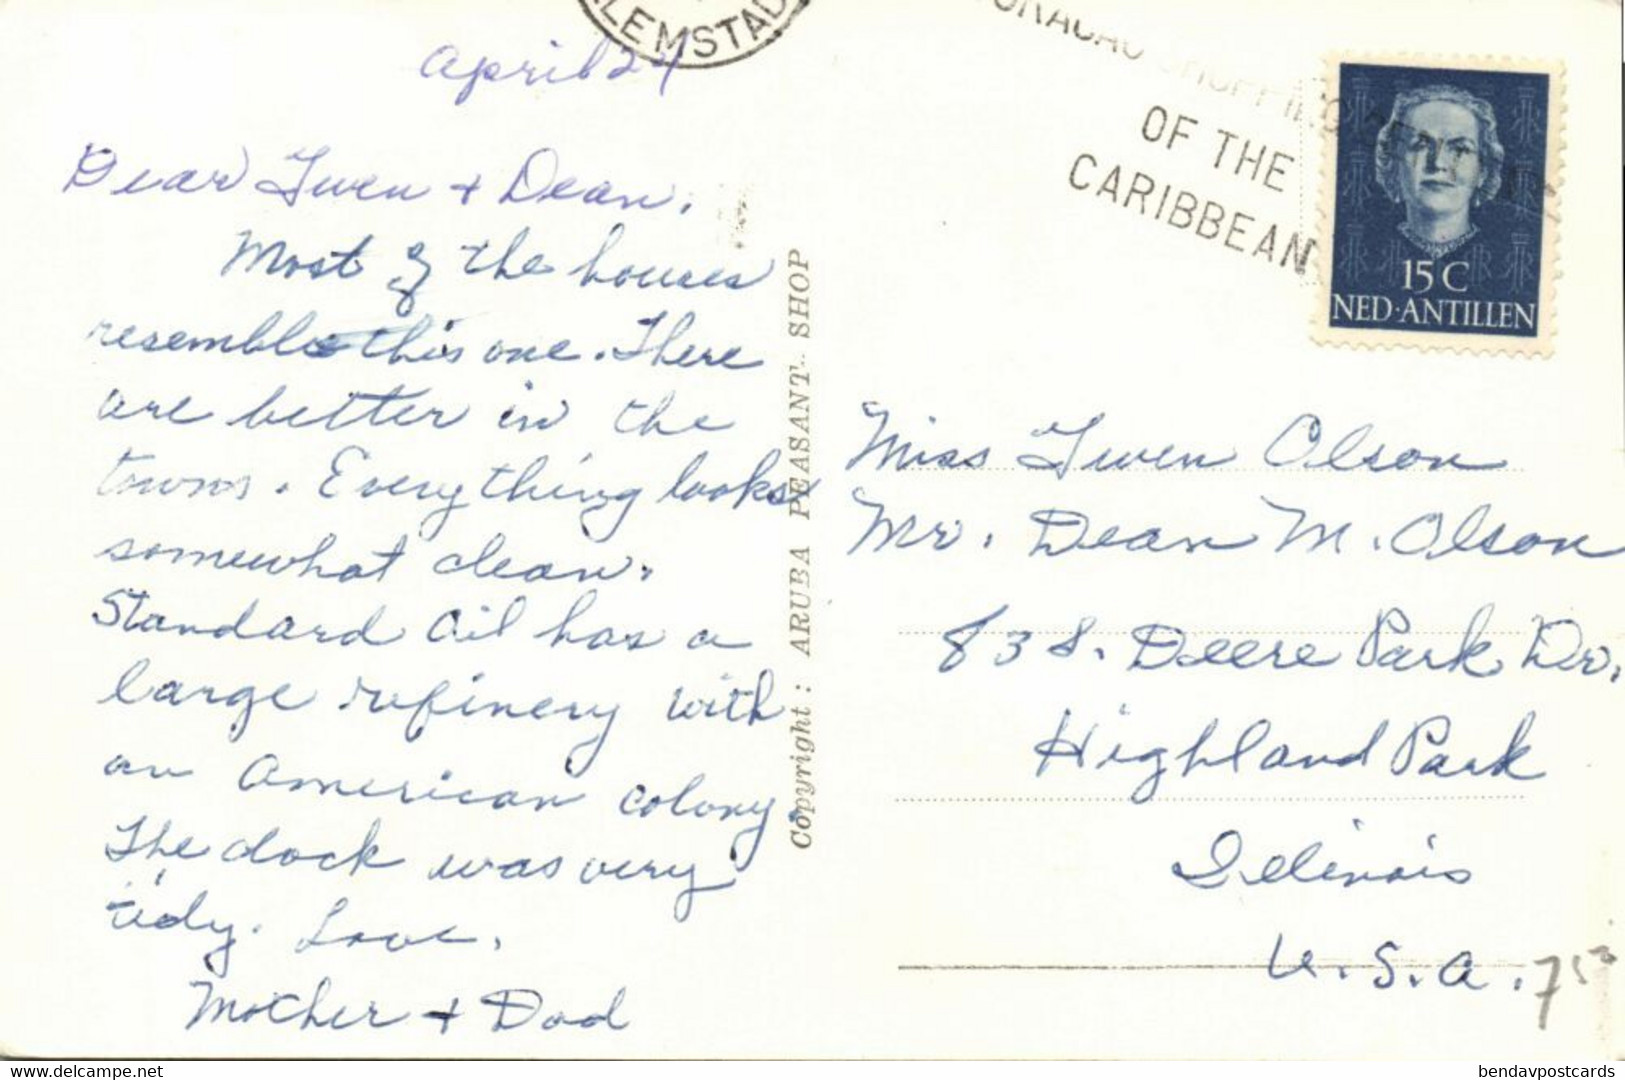 Aruba, N.A., Fisher Village (1950s) Tinted RPPC Postcard - Aruba